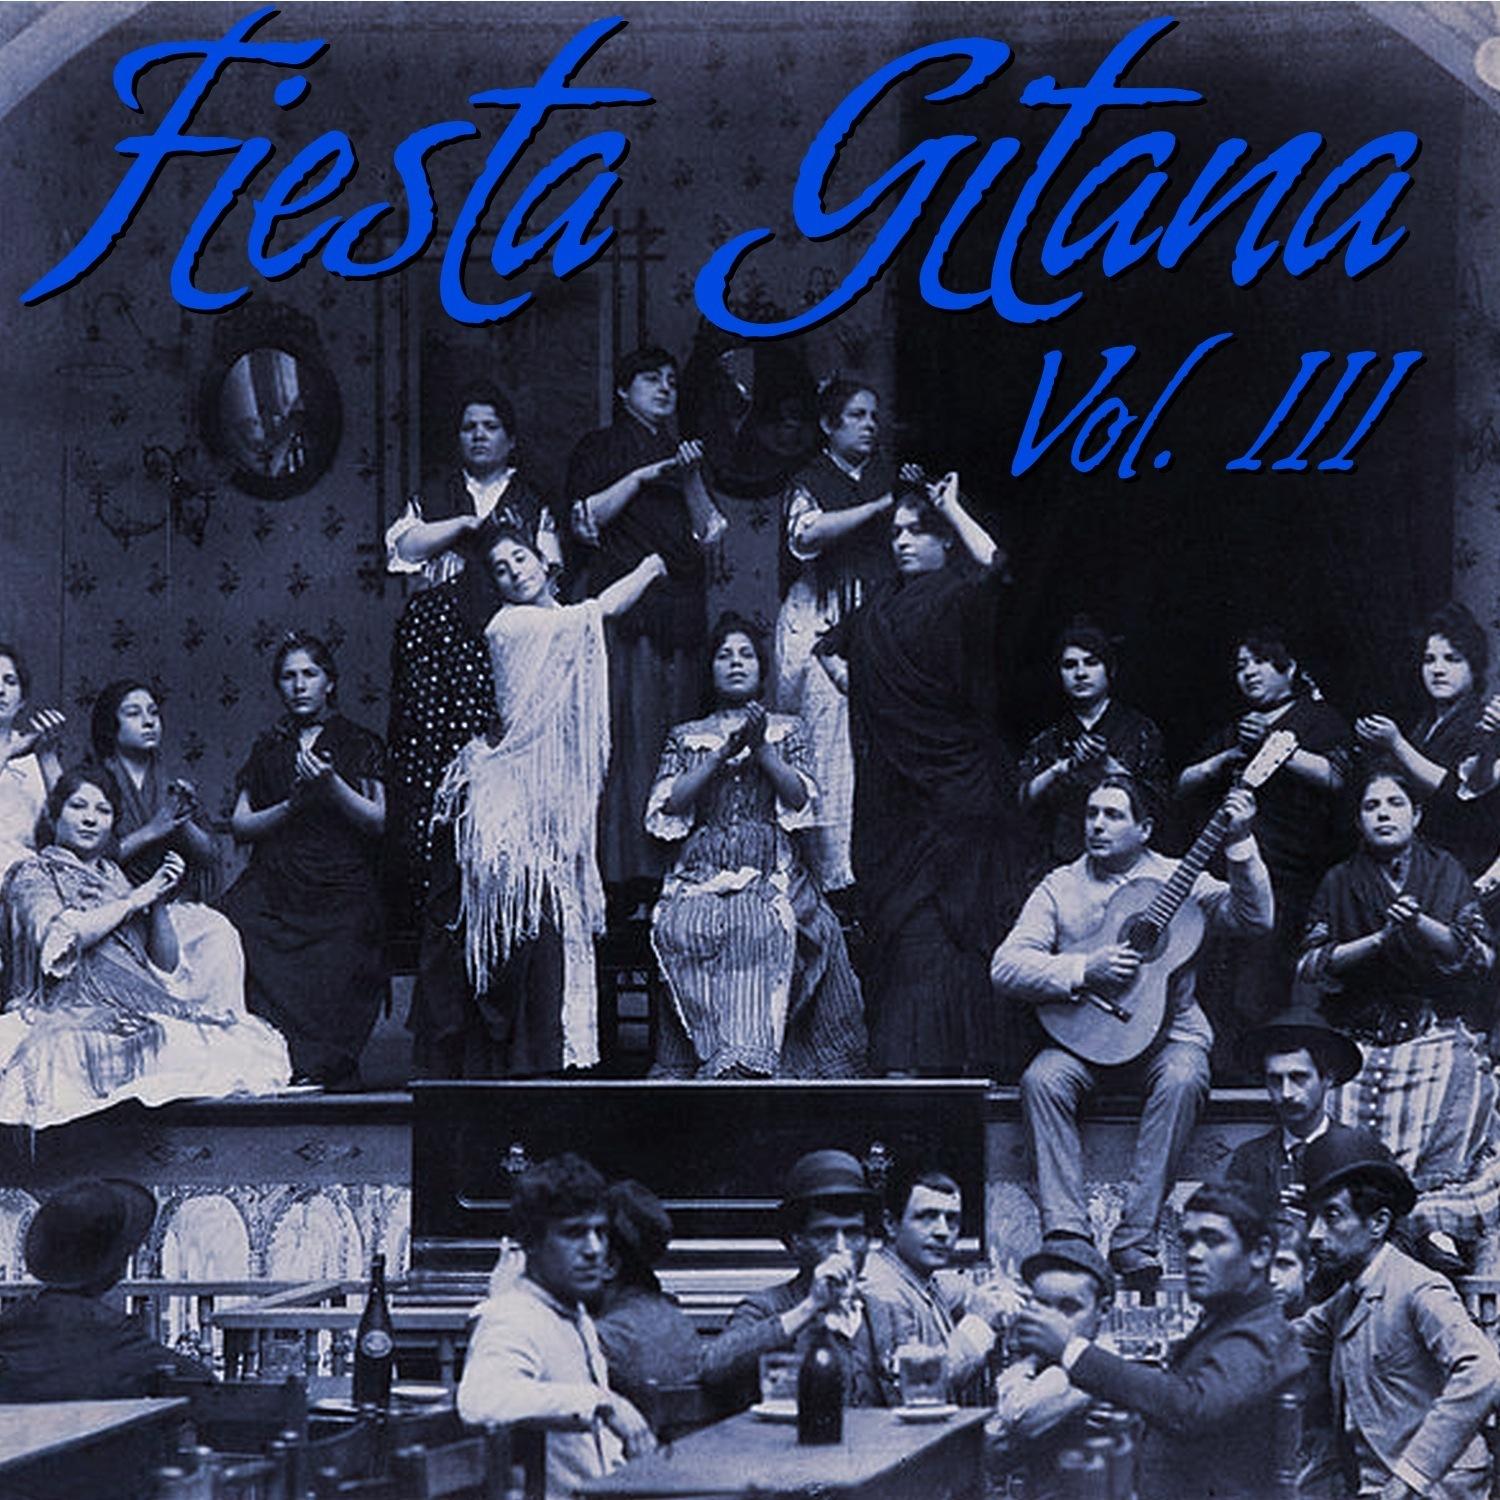 Fiesta Gitana Vol.III